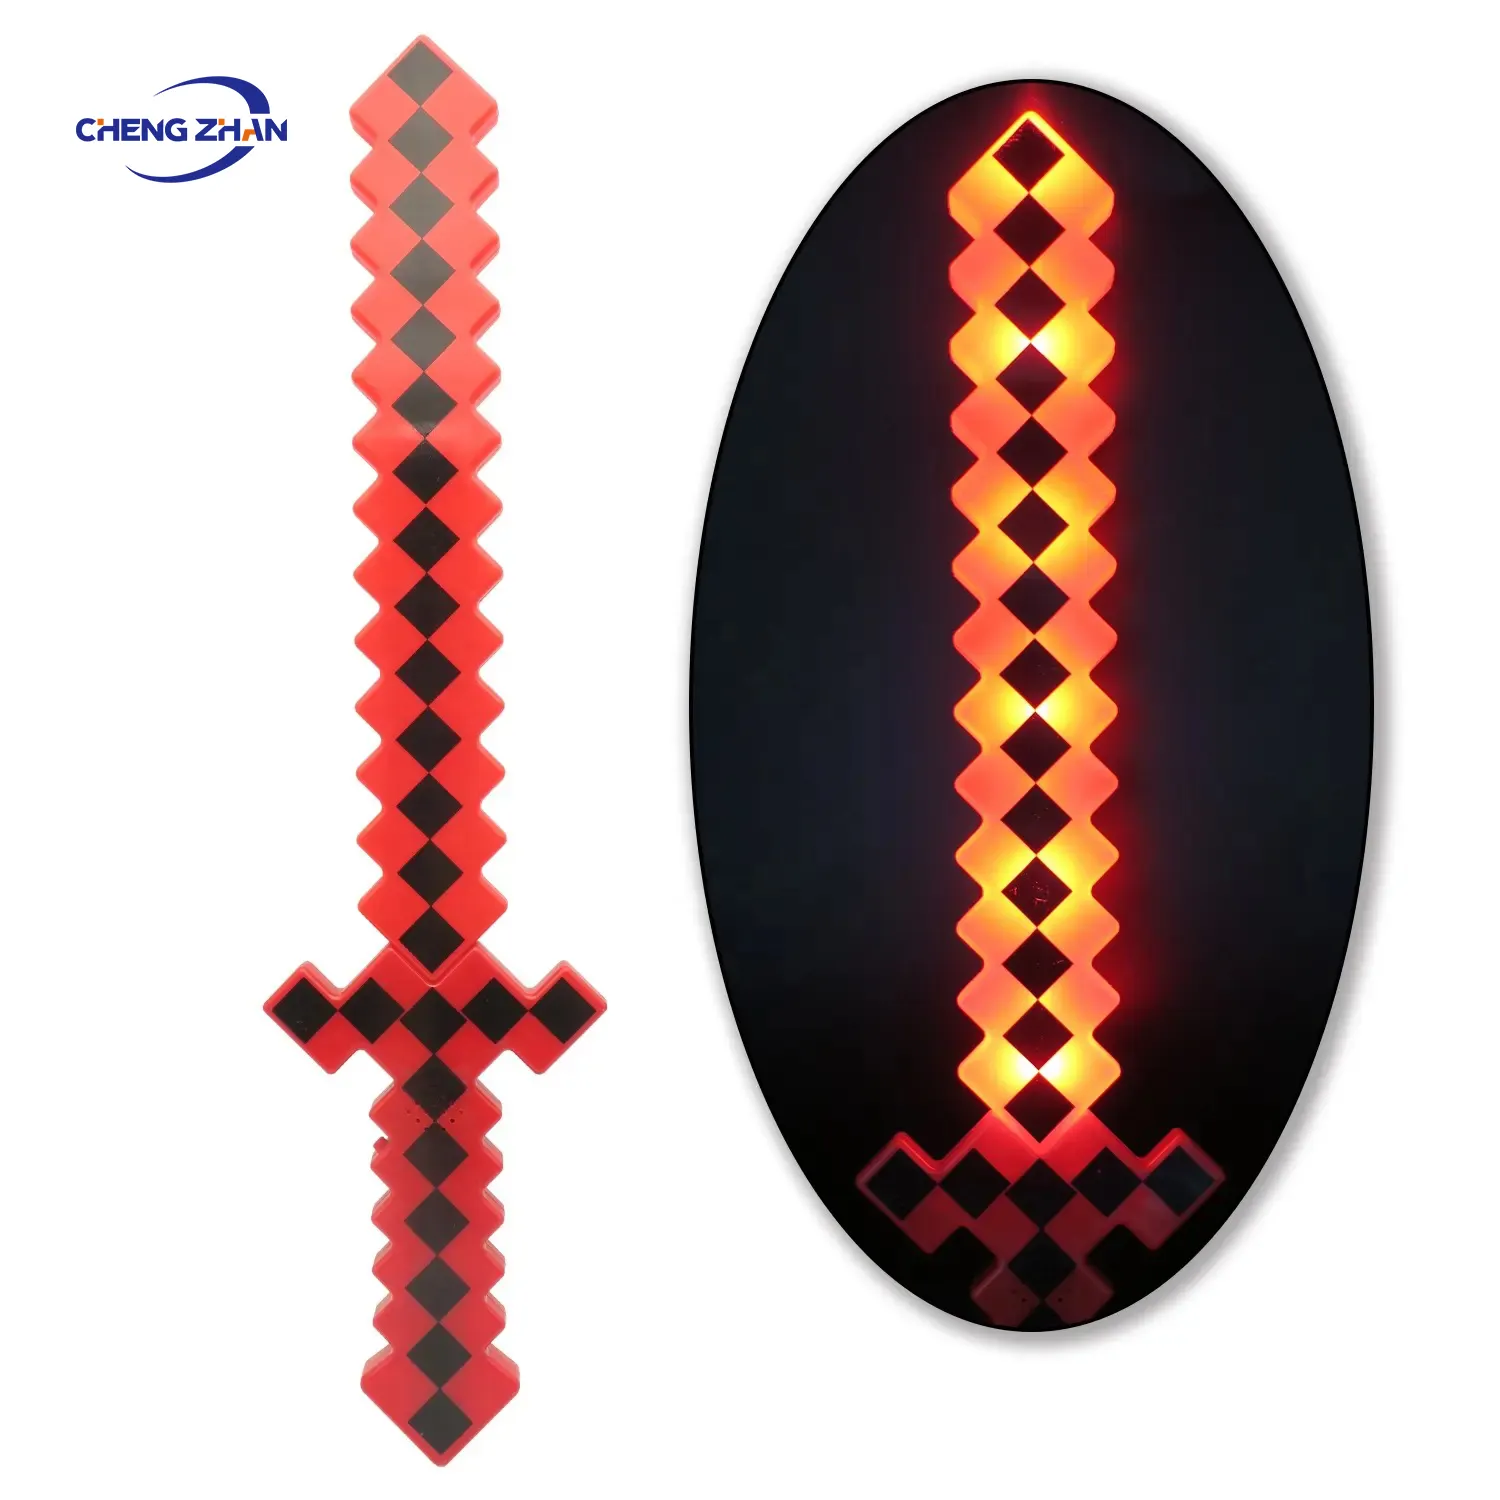 Mine craft Light Up pedang Pixel, mainan Flash cahaya mosaik tiga warna pedang bercahaya persegi suara dan cahaya LED